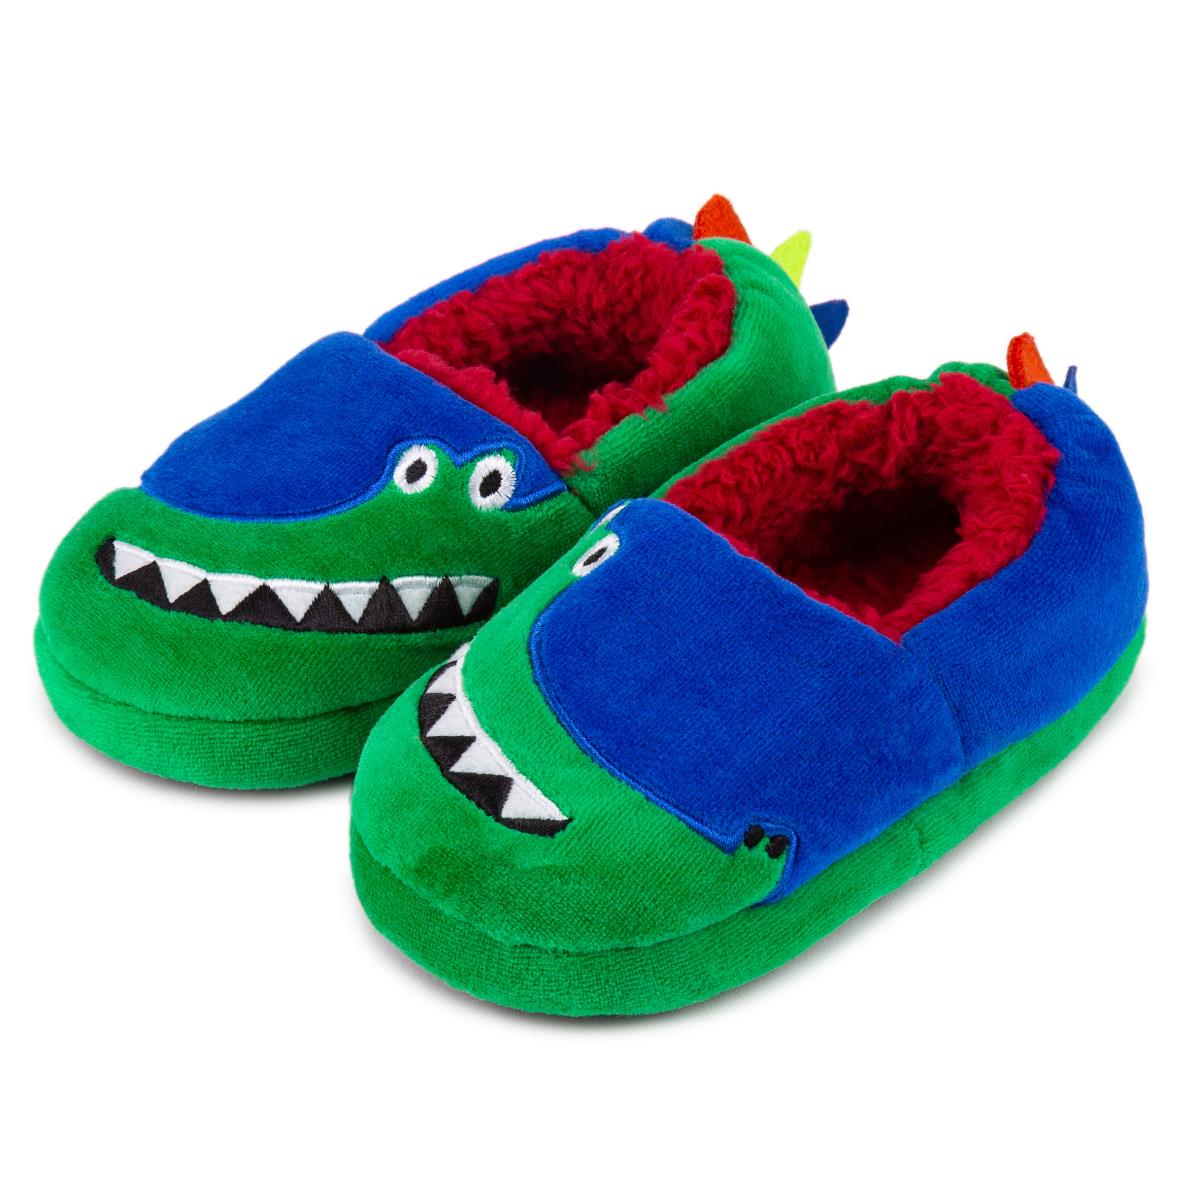 UK 7426823491413 Age 4 To 7 Years Morphy Richards Kids Rainbow Dinosaur Crocodile Slippers 11-13 Size 